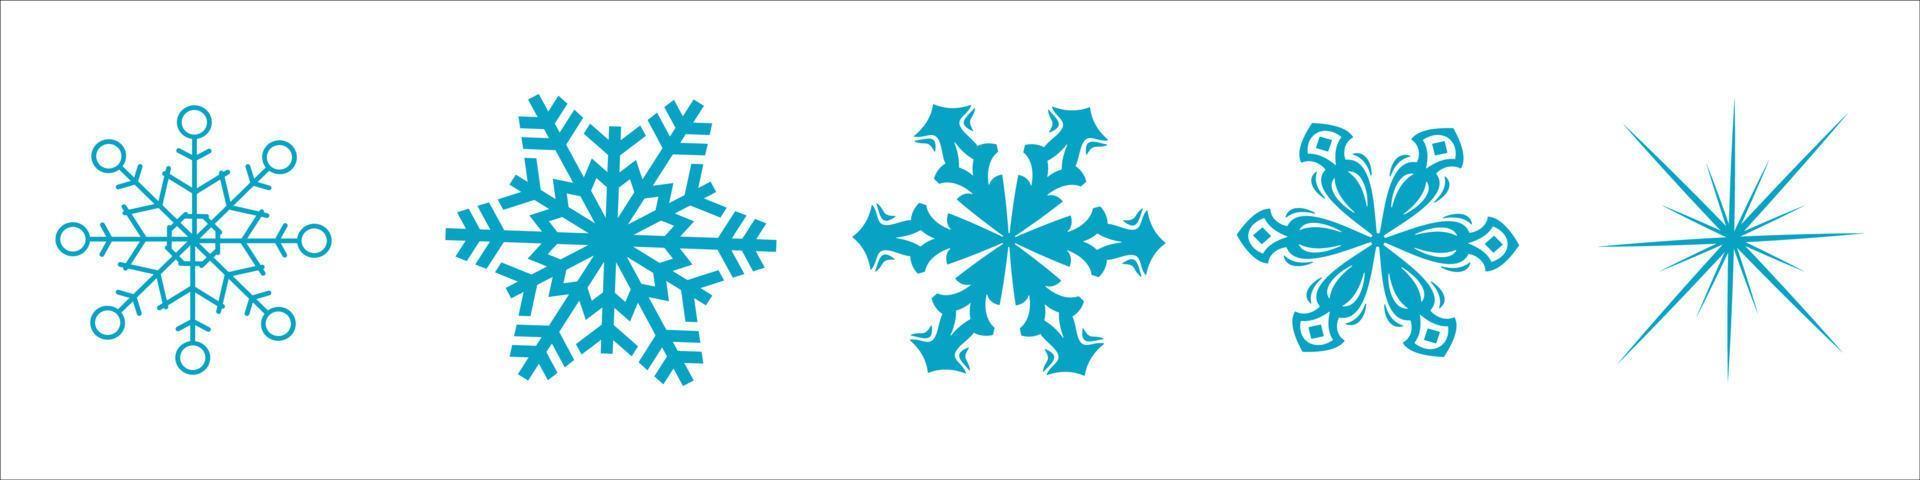 snowflakes set vector eps 10